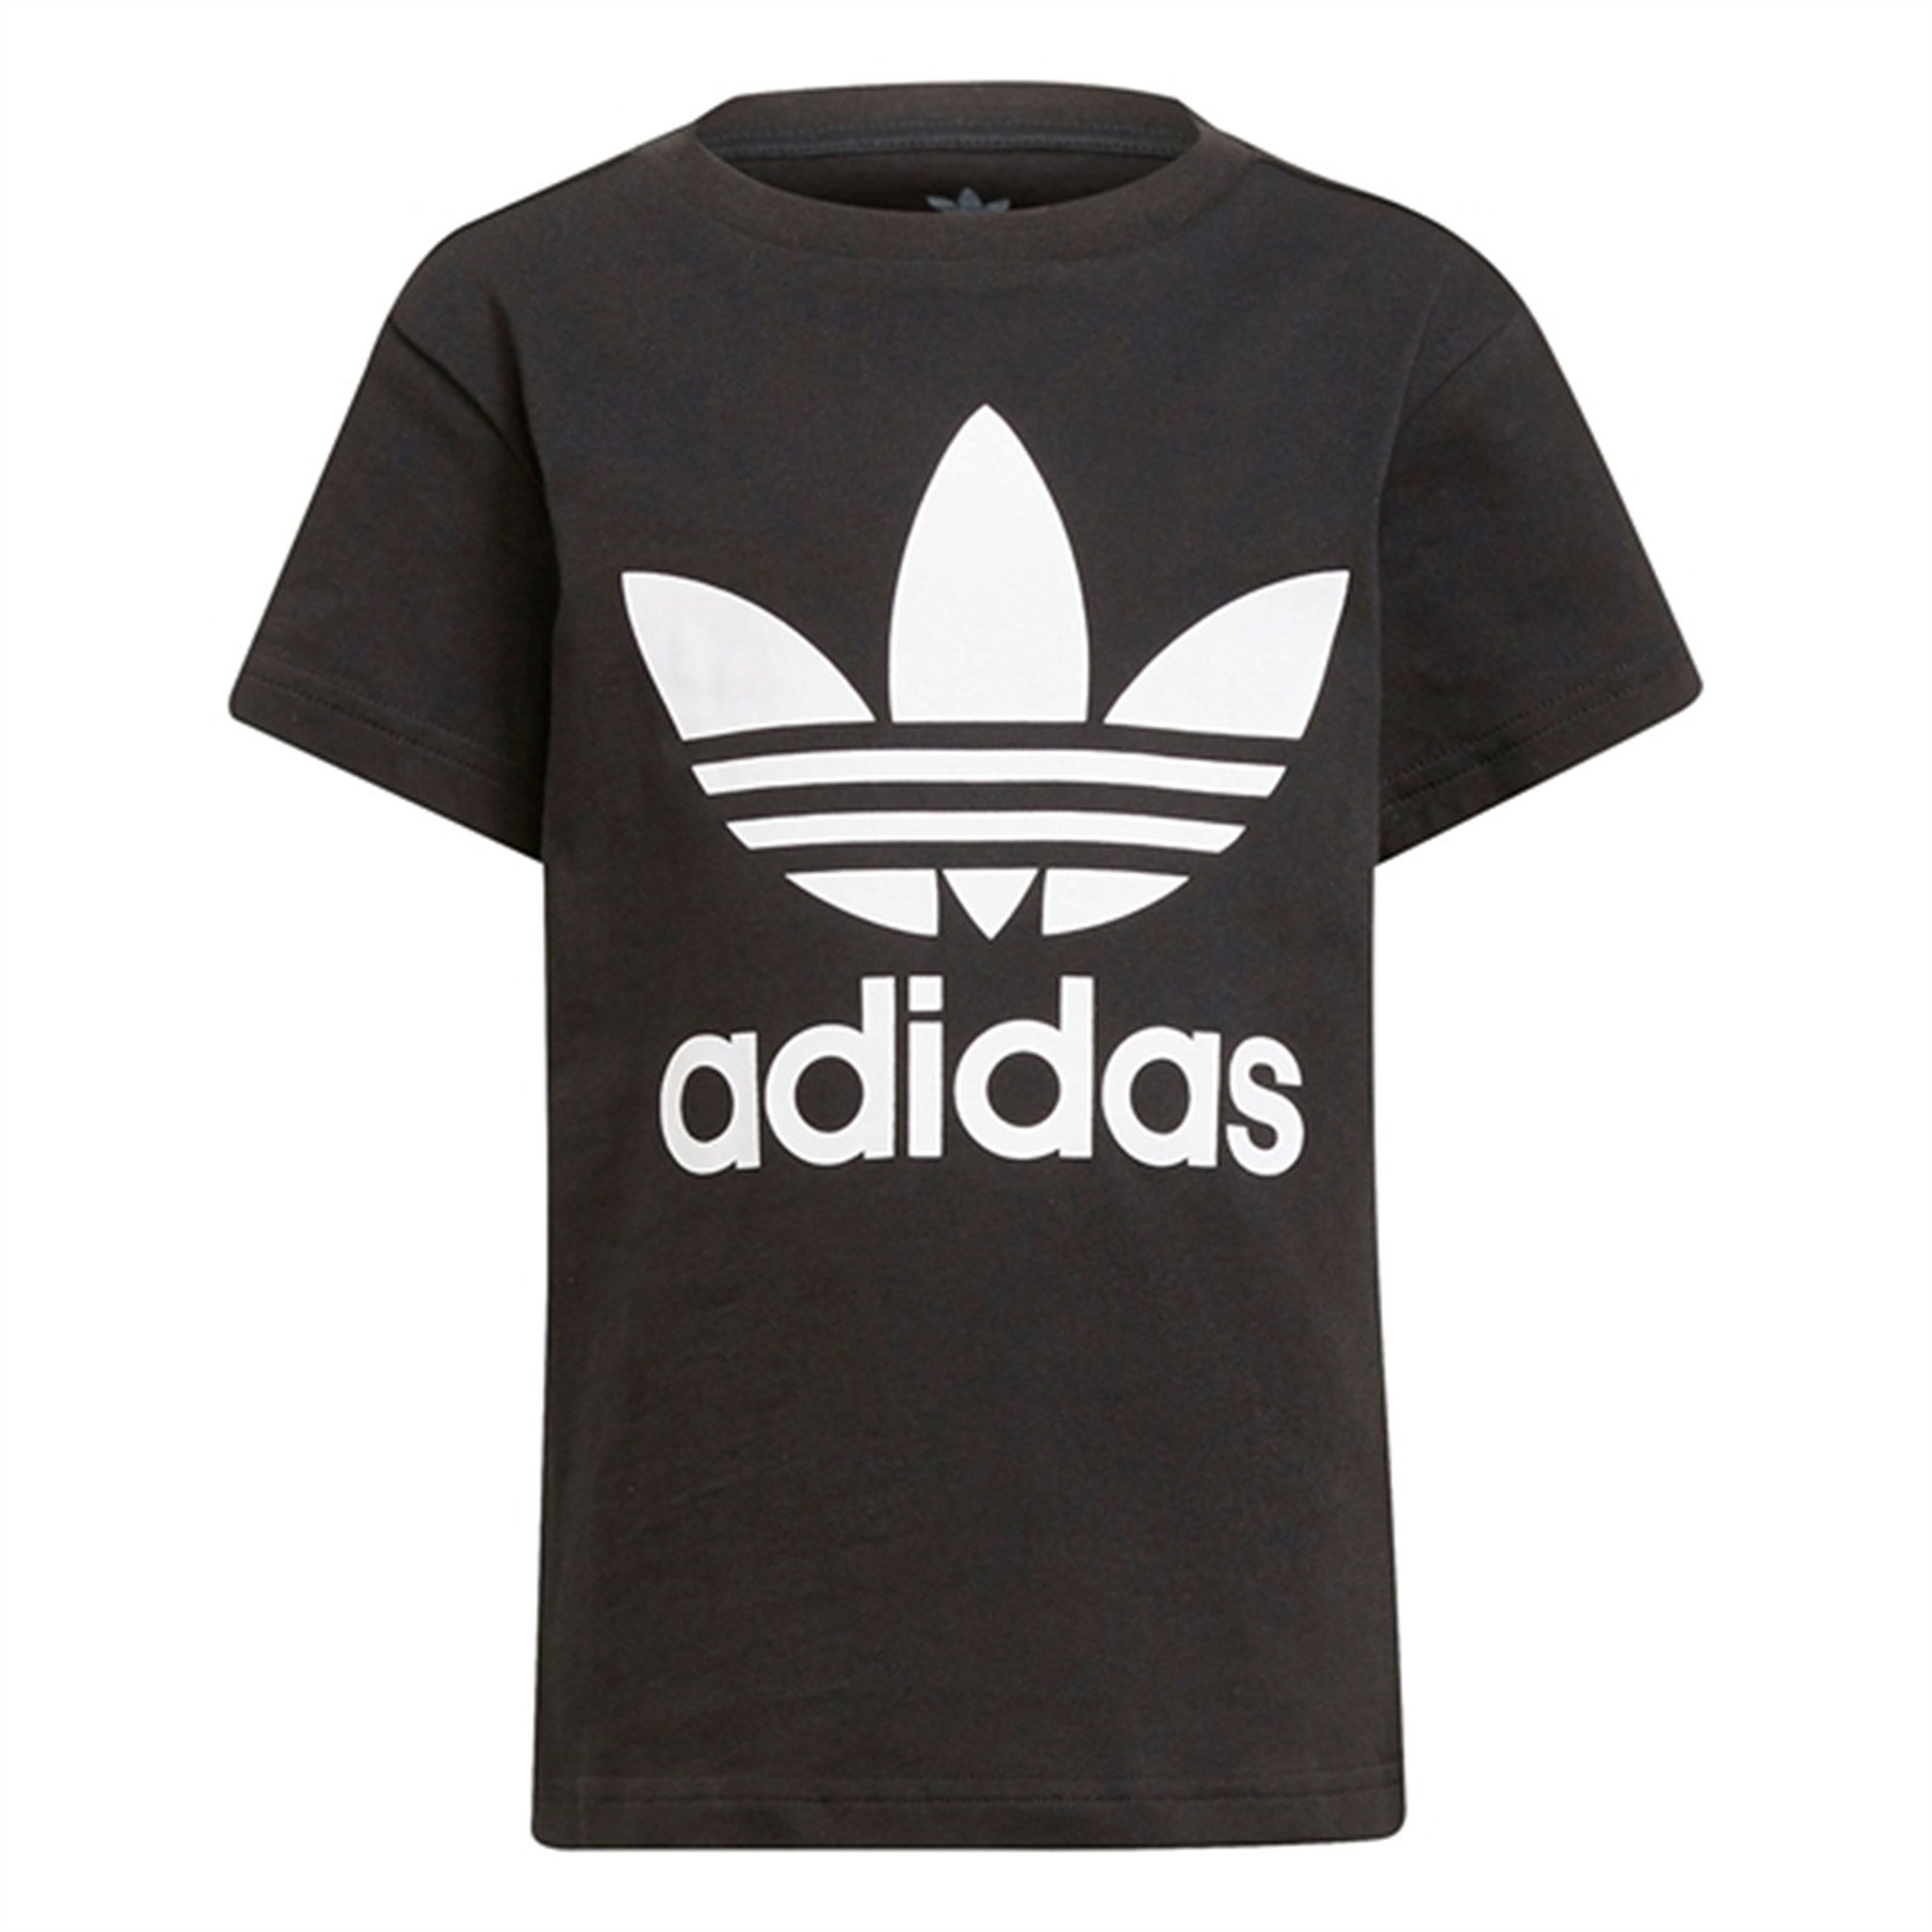 adidas Black/White Trefoil T-Shirt